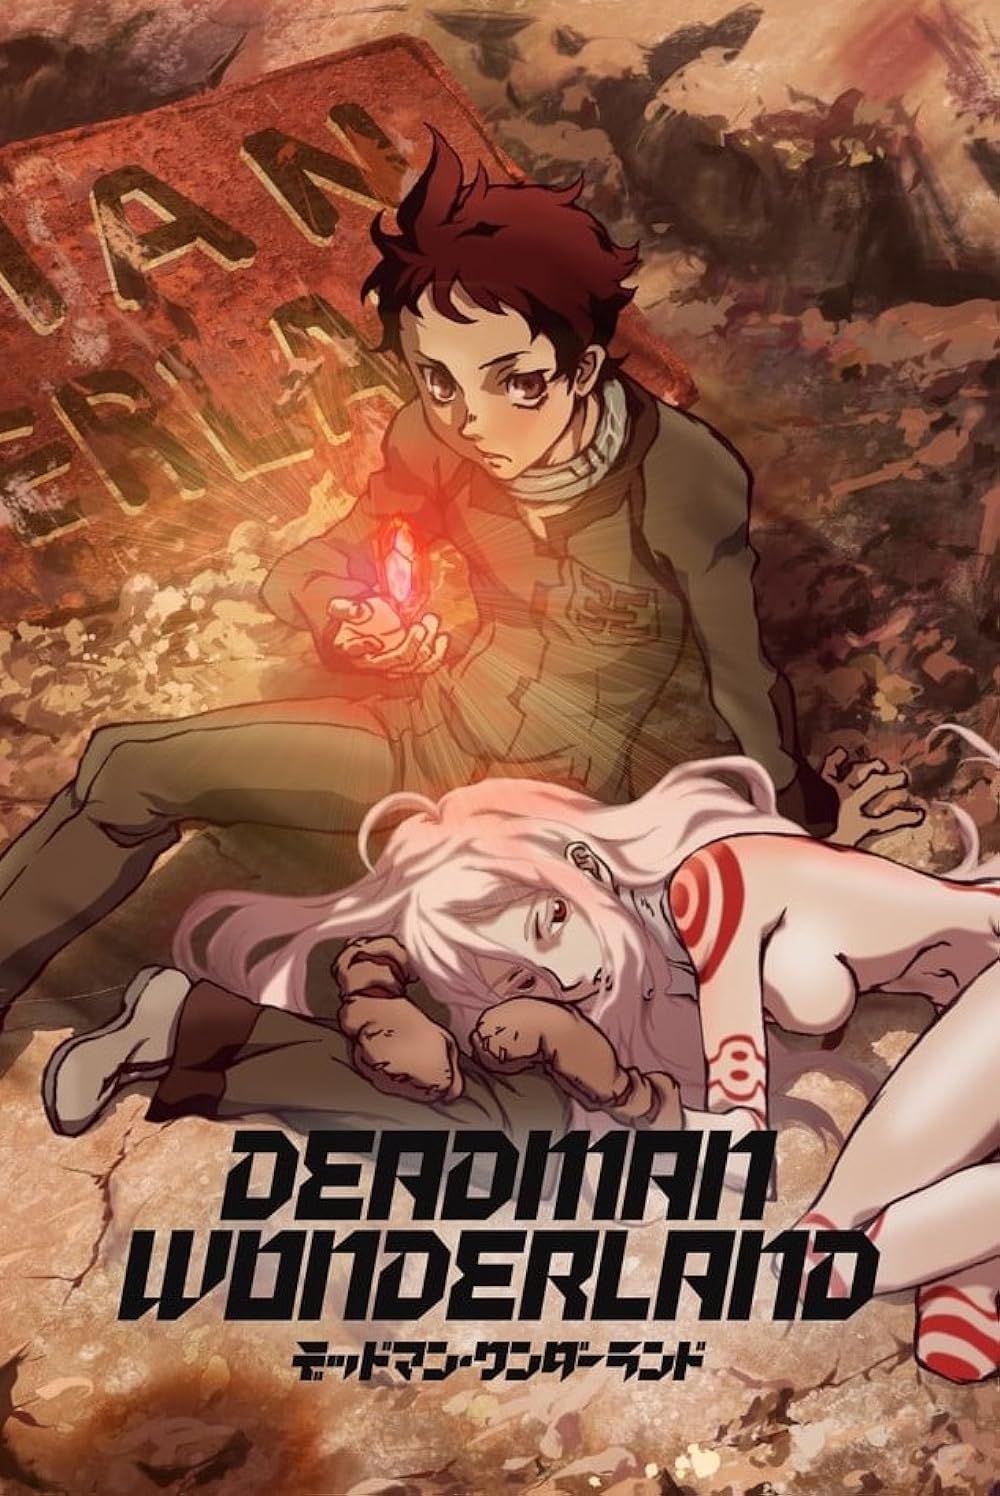 Poster of Deadman Wonderland with Ganta and Shiro